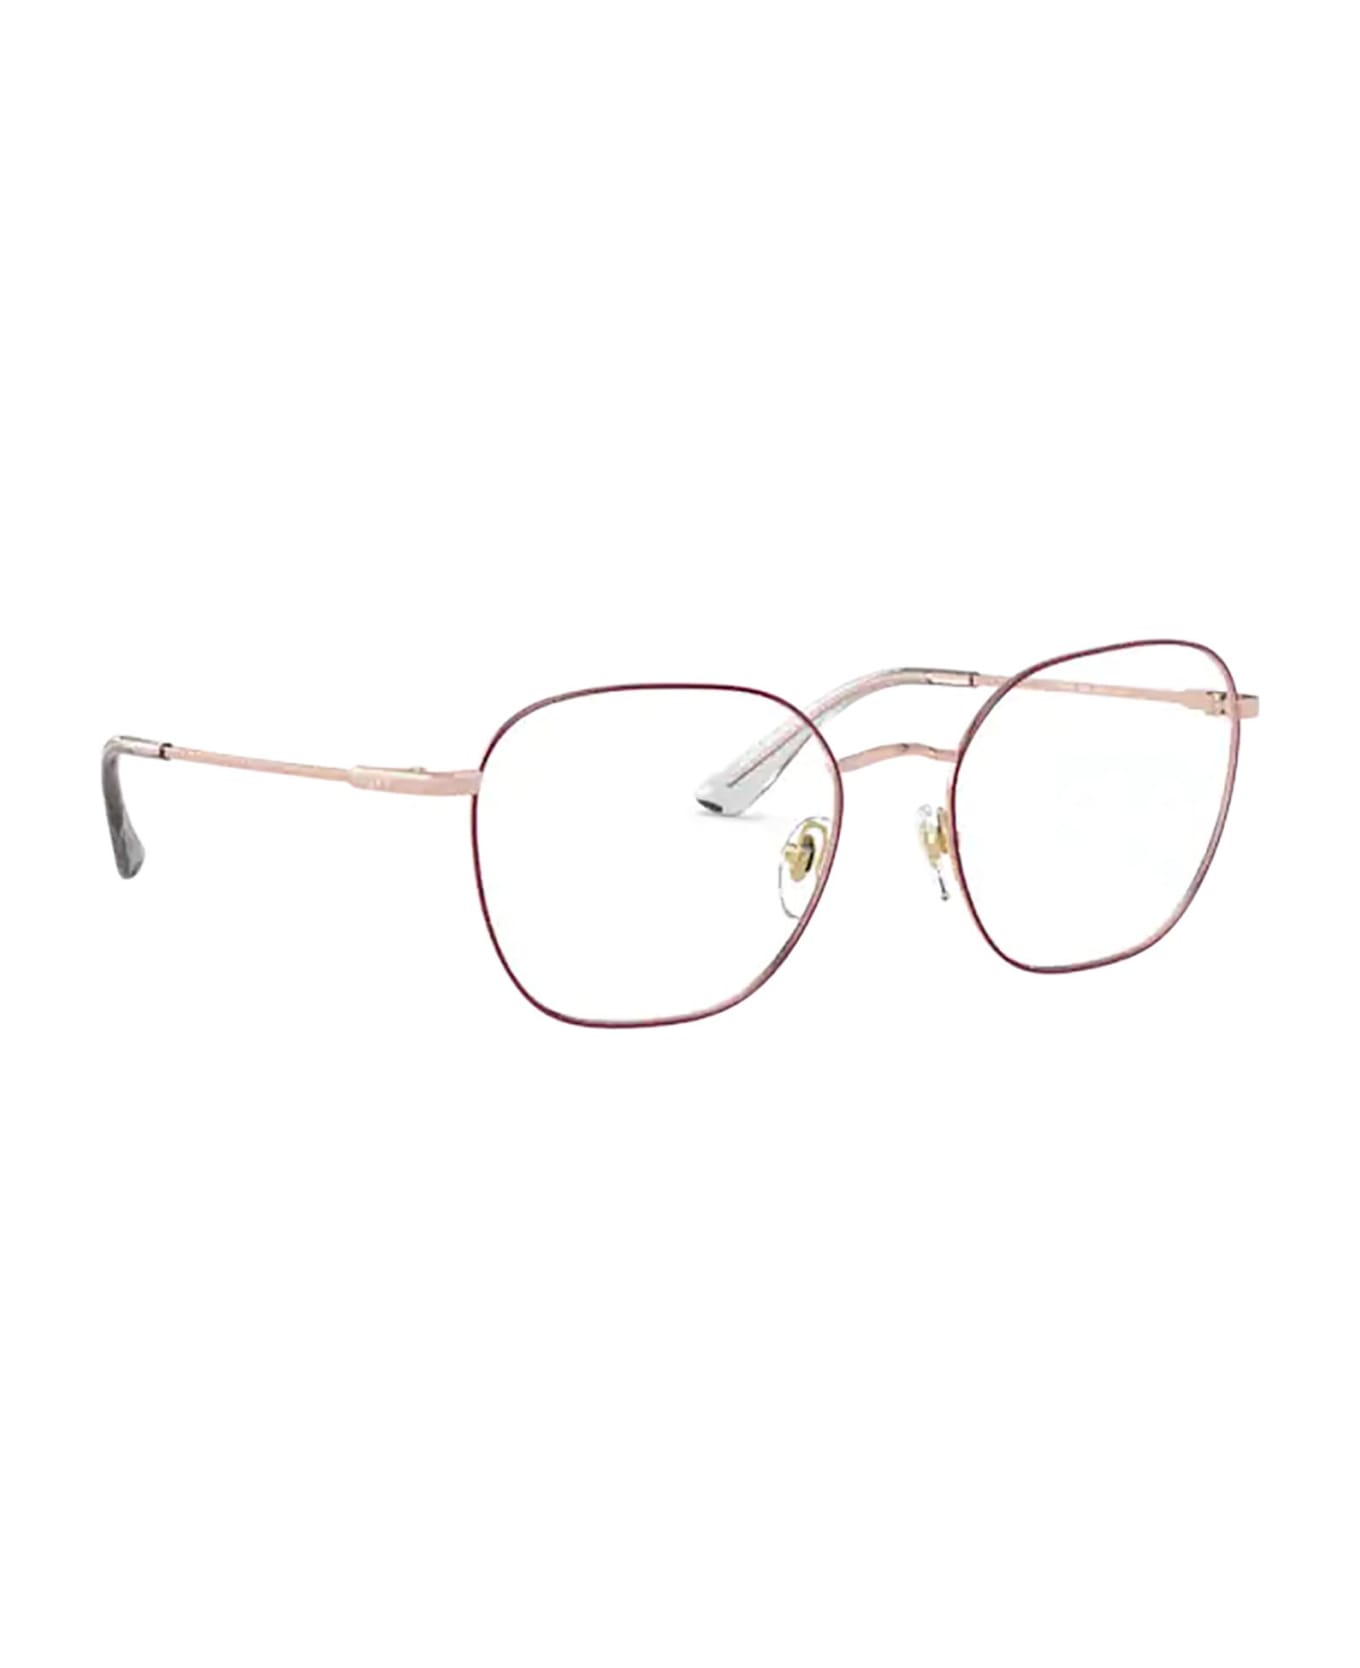 Vogue Eyewear Vo4178 Top Purple / Rose Gold Glasses - TOP PURPLE / ROSE GOLD